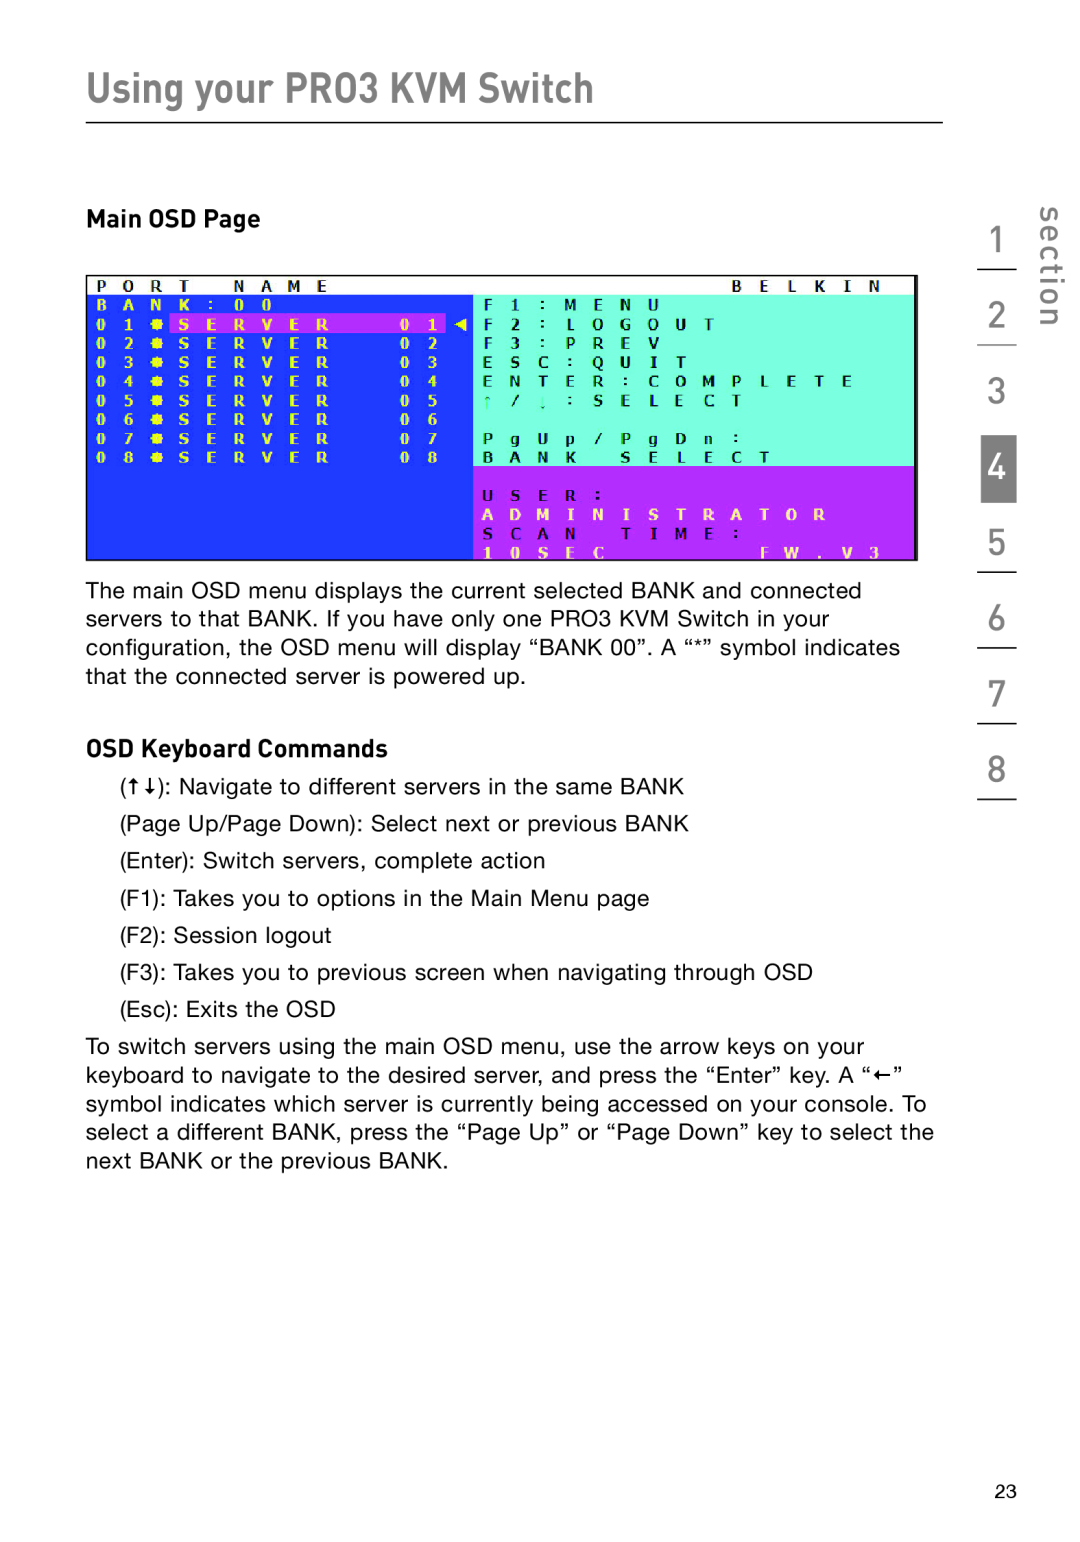 Belkin F1DA208Z manual Main OSD Page, OSD Keyboard Commands, Using your PRO3 KVM Switch, section 